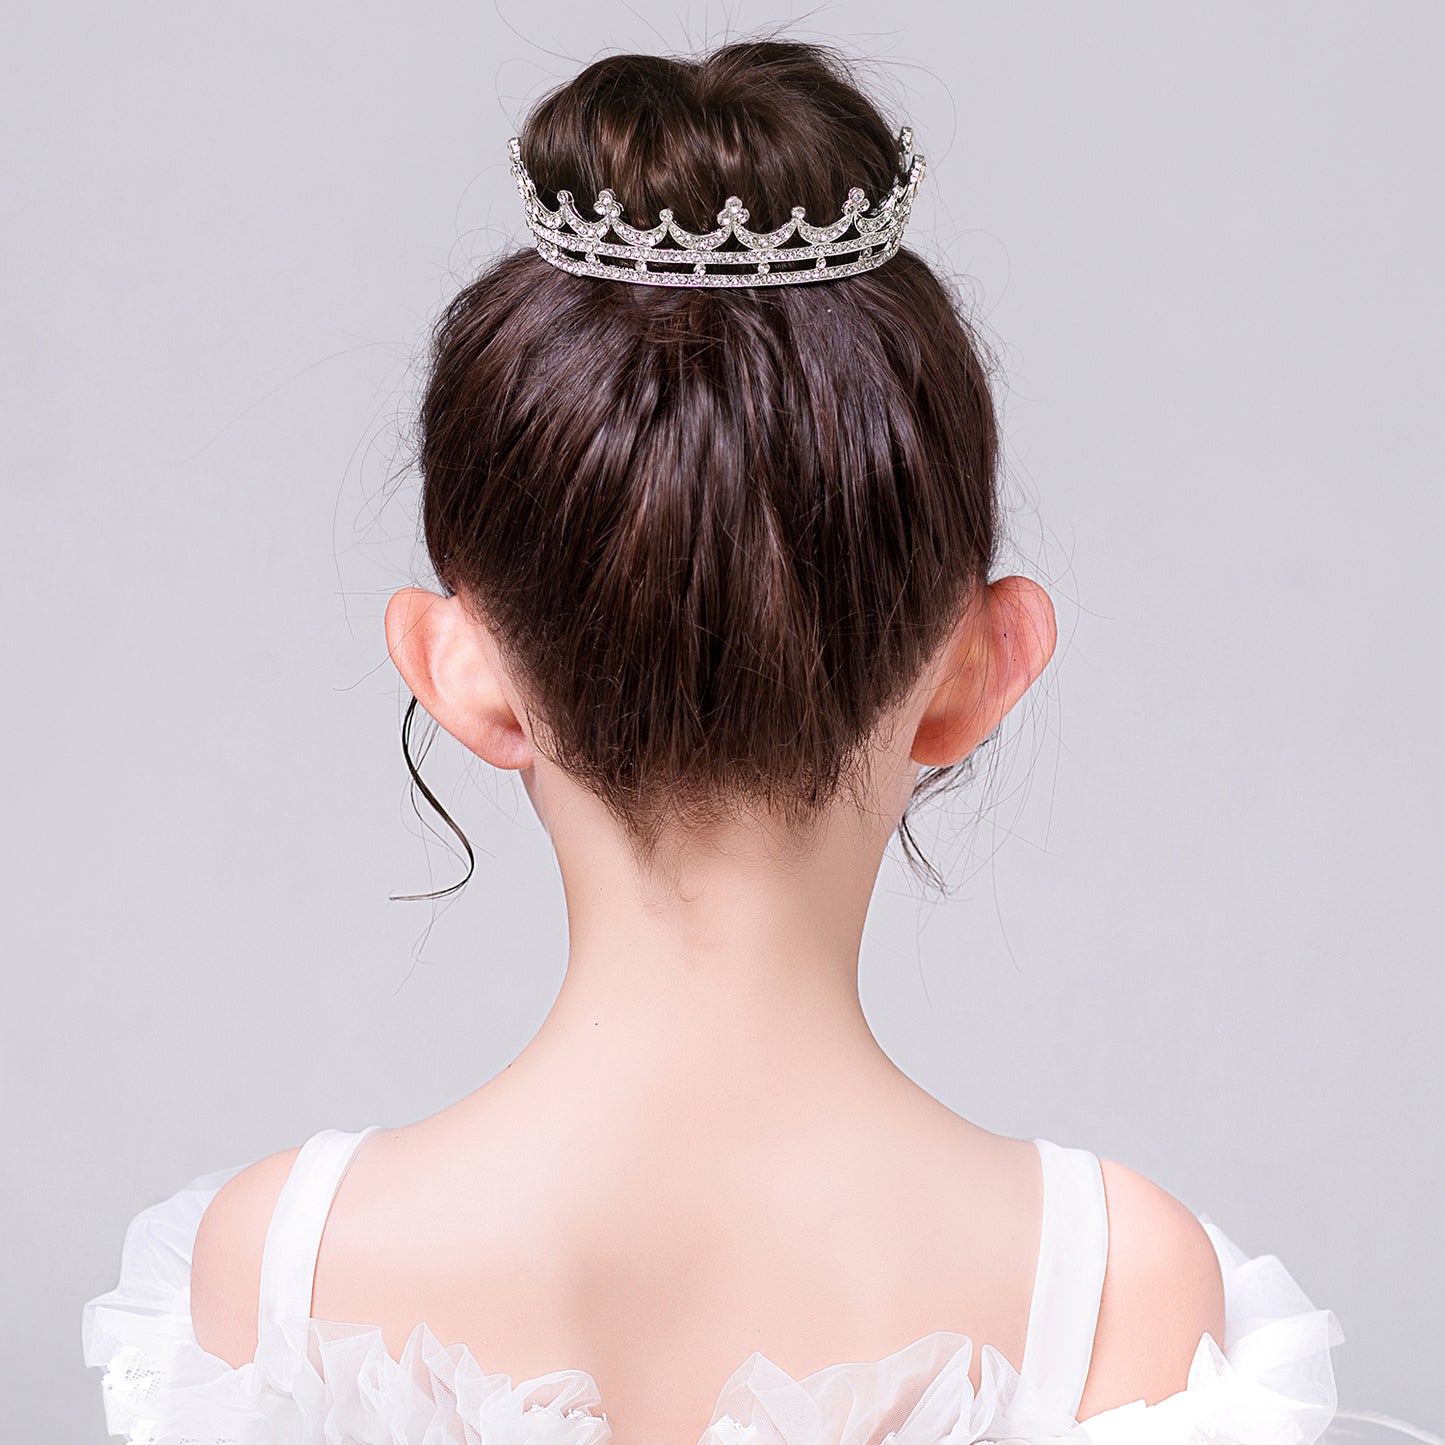 Girls Party Hair Accessories Wedding Princess Headpiece/Crowns & Tiaras Elegant